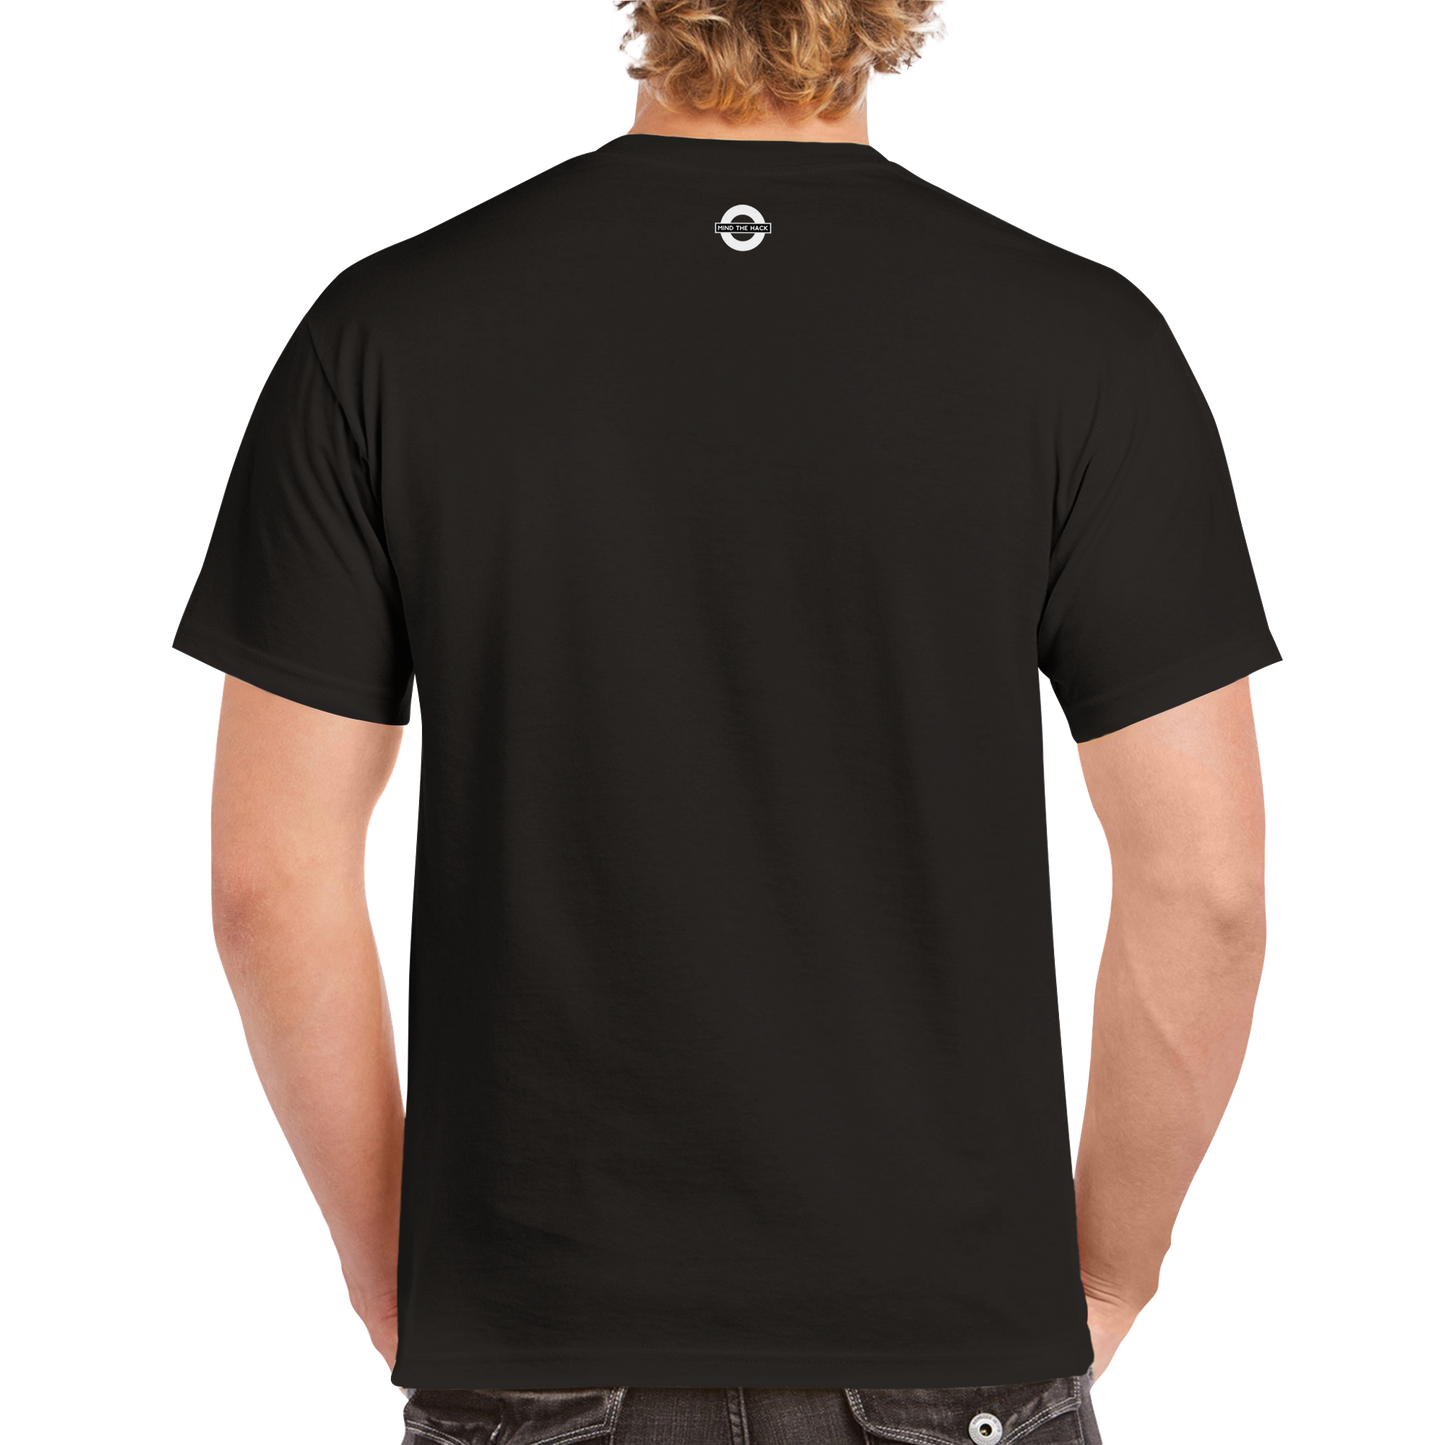 Great shirt of hacking Unisex T-Shirt